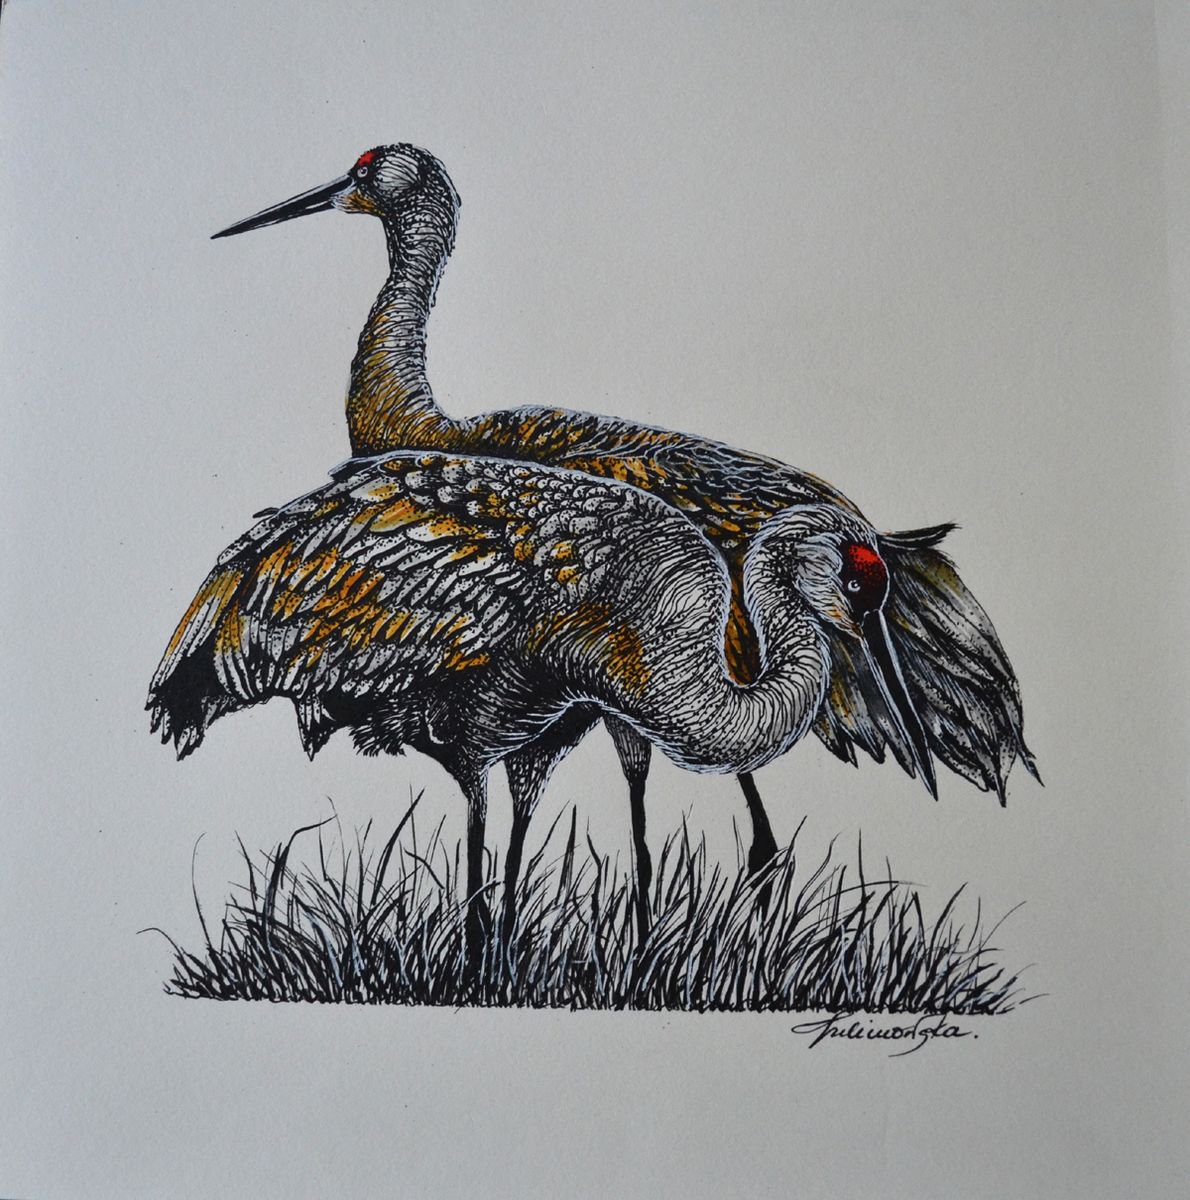 Canadian Cranes by Maja Tulimowska - Chmielewska